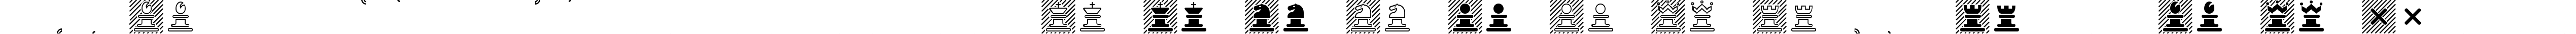 Пример написания английского алфавита шрифтом Chess Marroquin